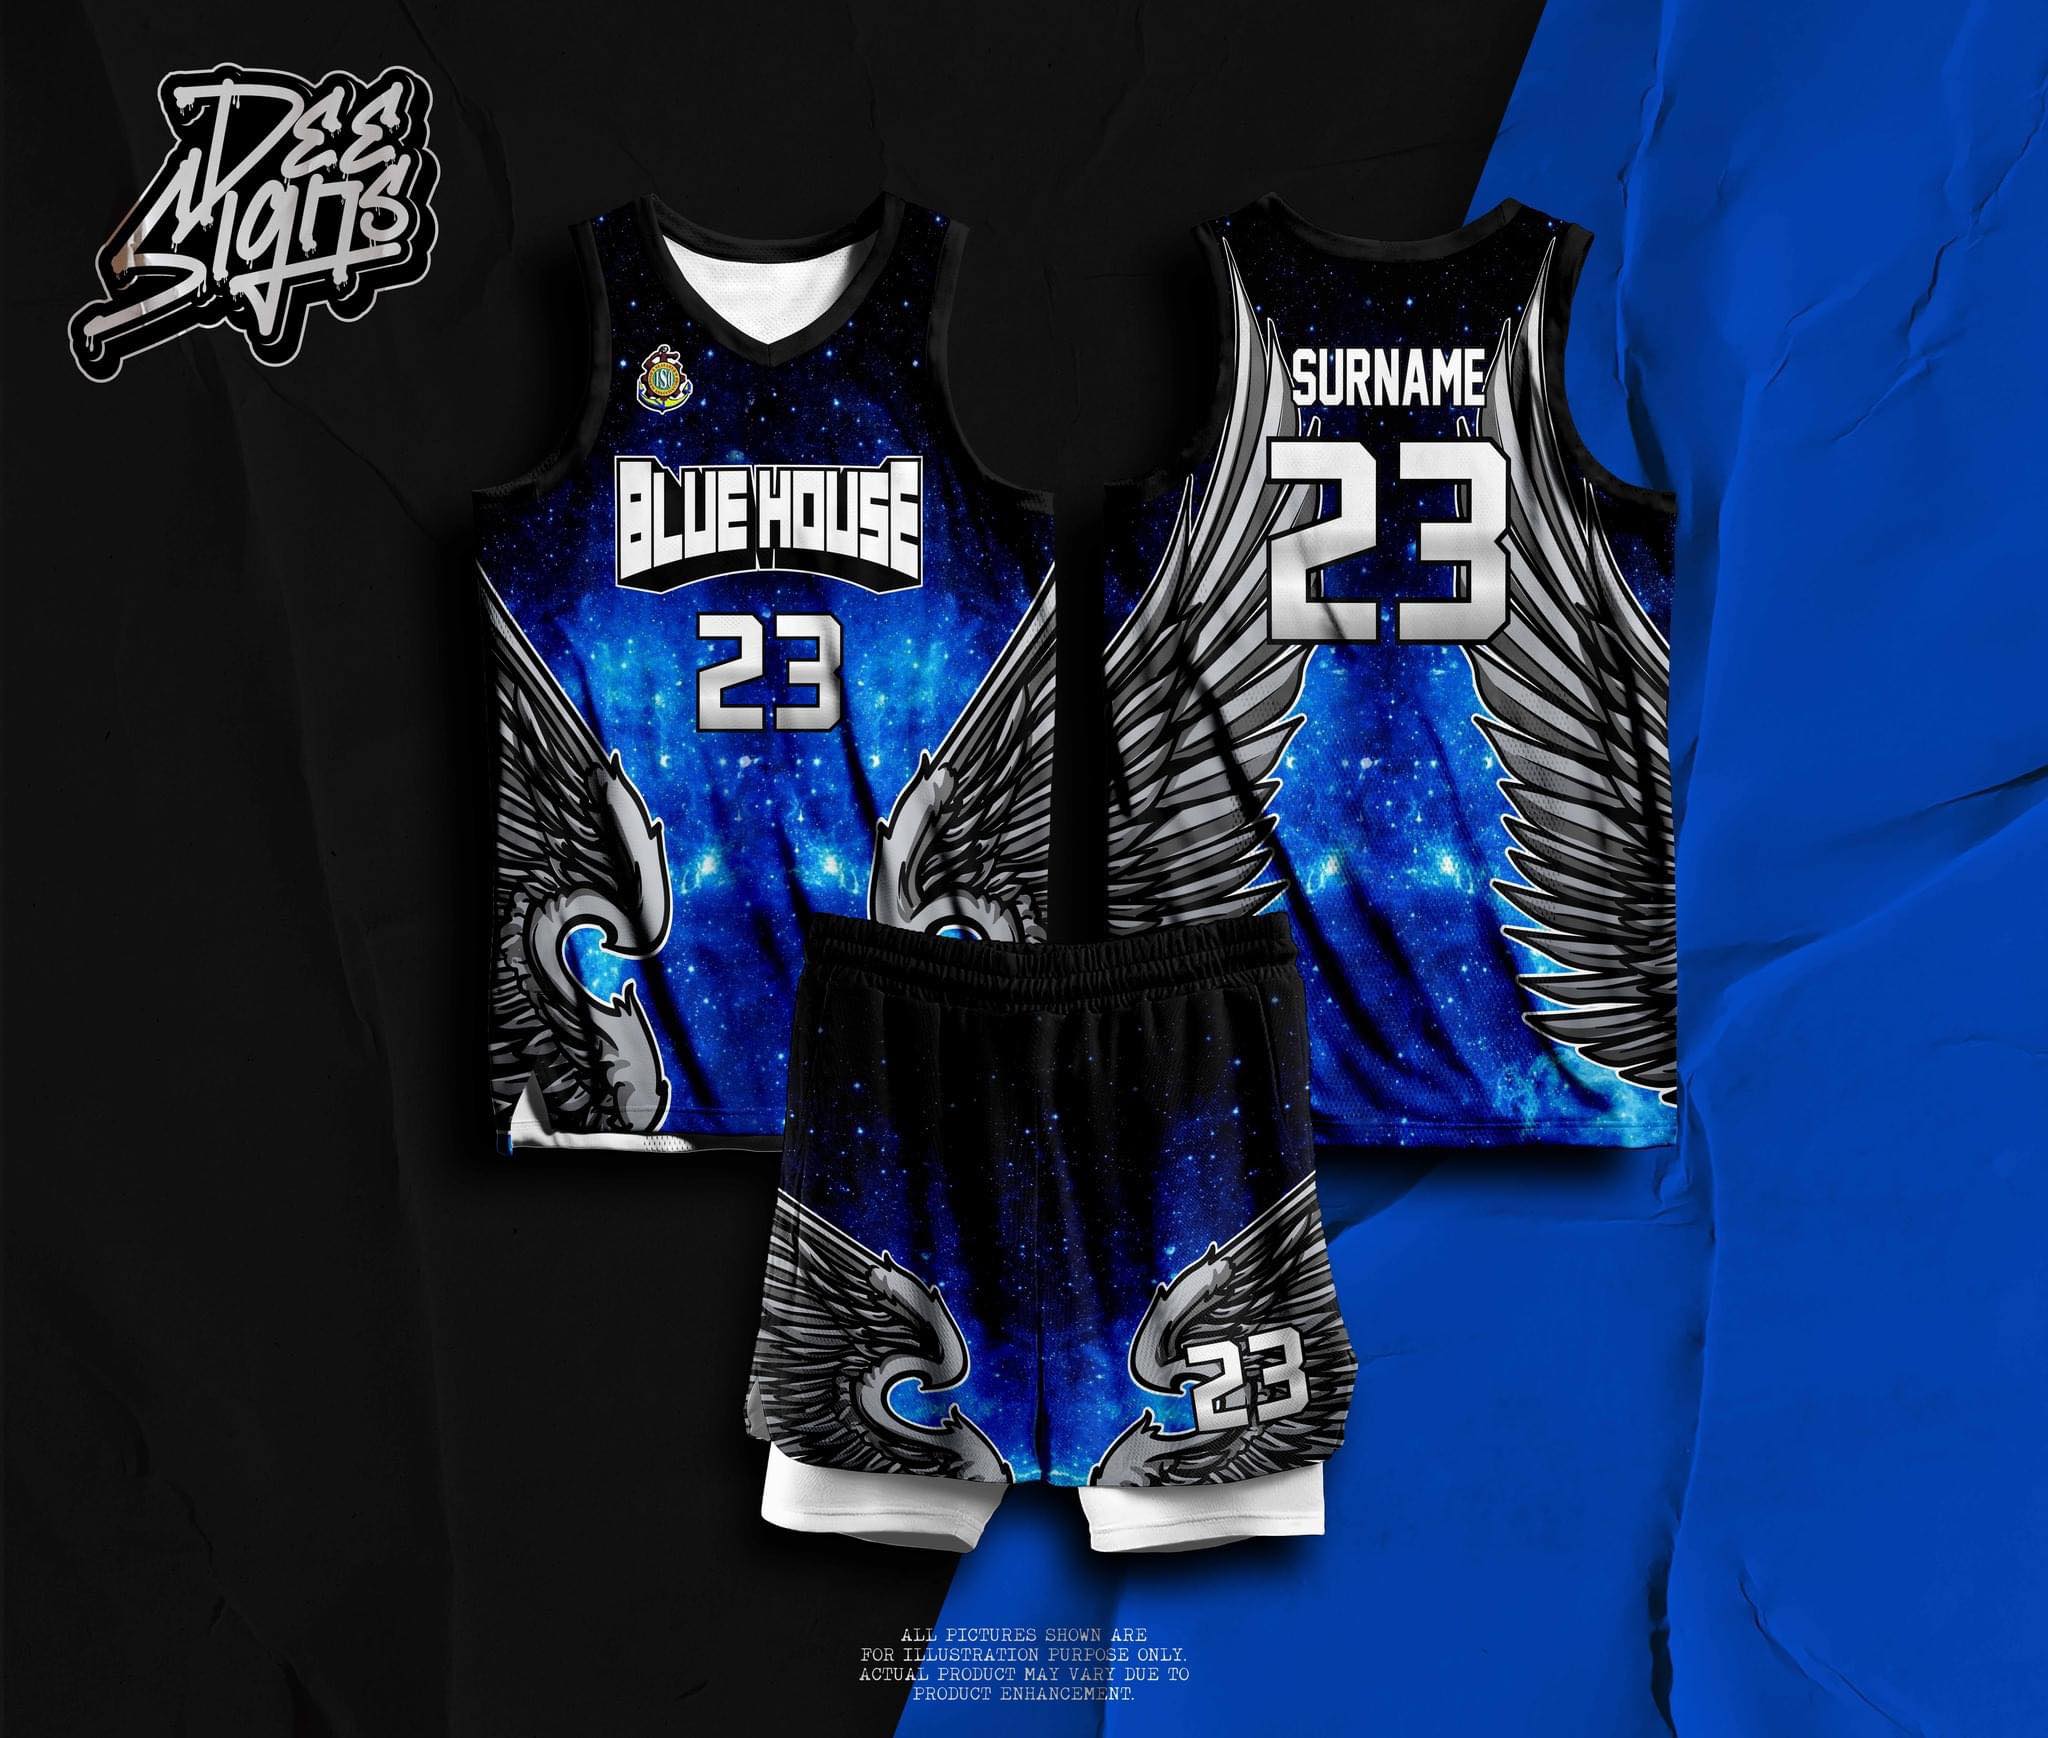 Sacramento Kings Style Customizable Basketball Jersey – Best